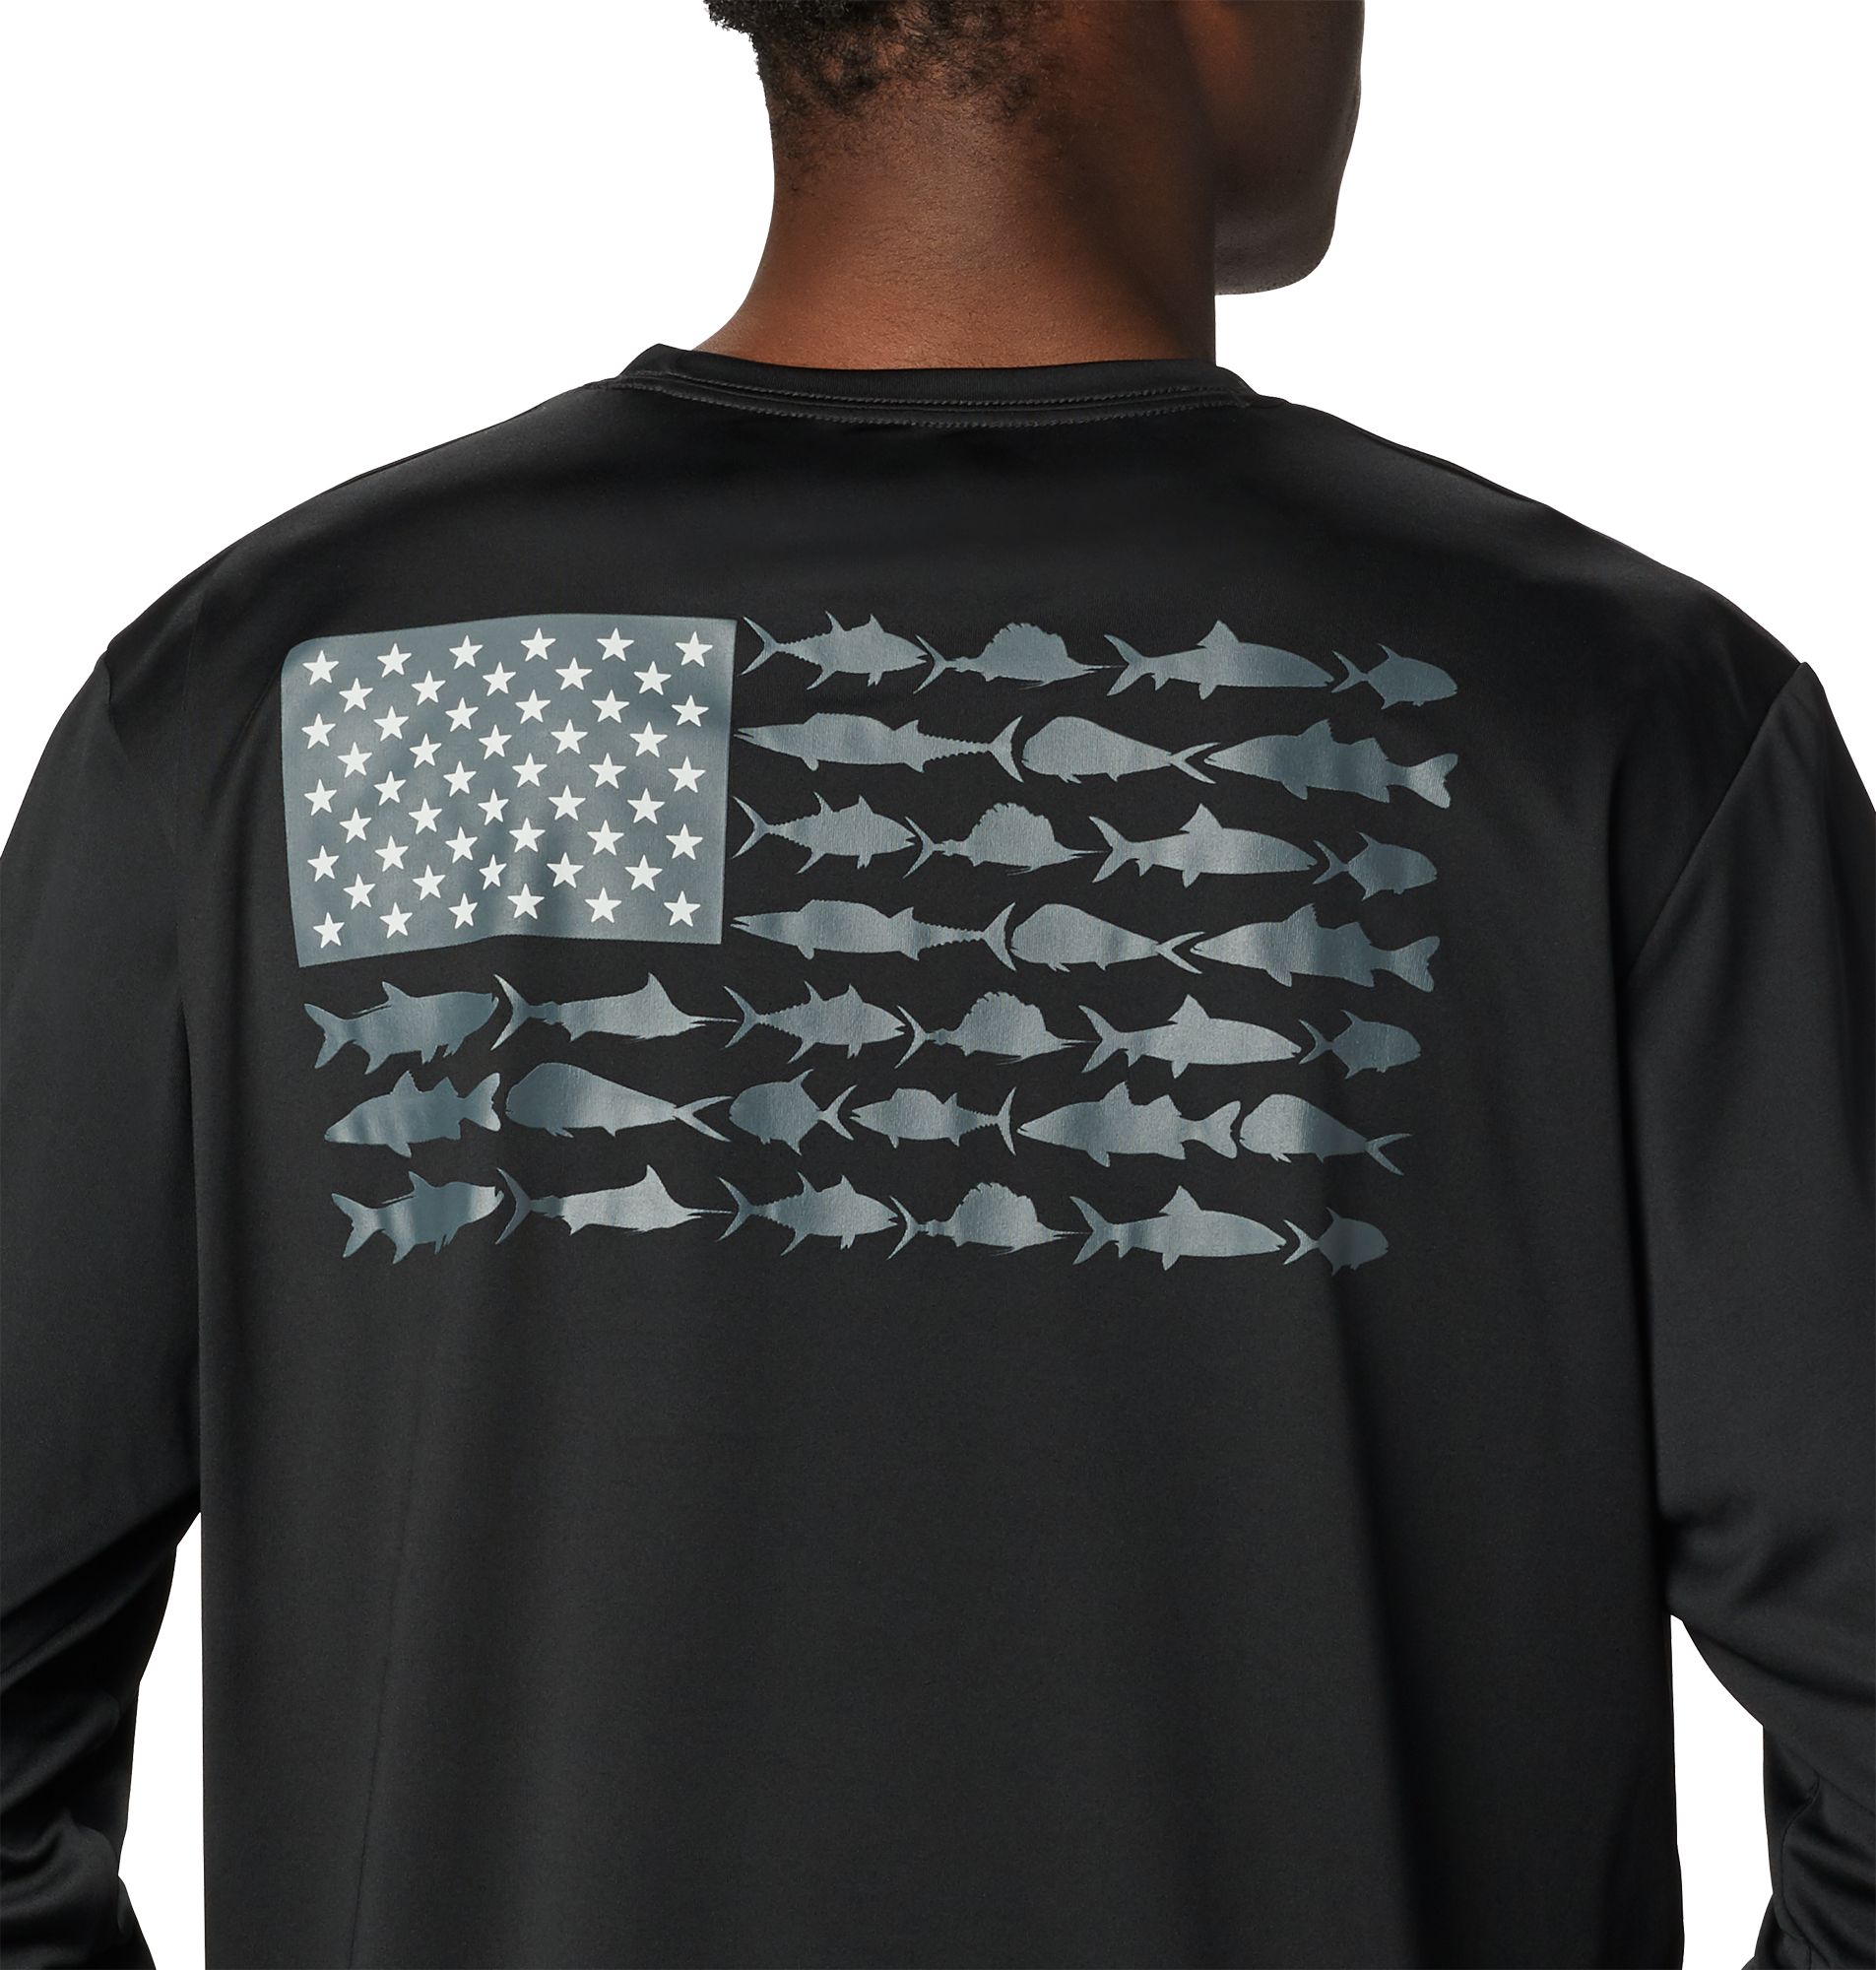 Columbia Men's PFG Terminal Tackle Fish Flag Long Sleeve Shirt